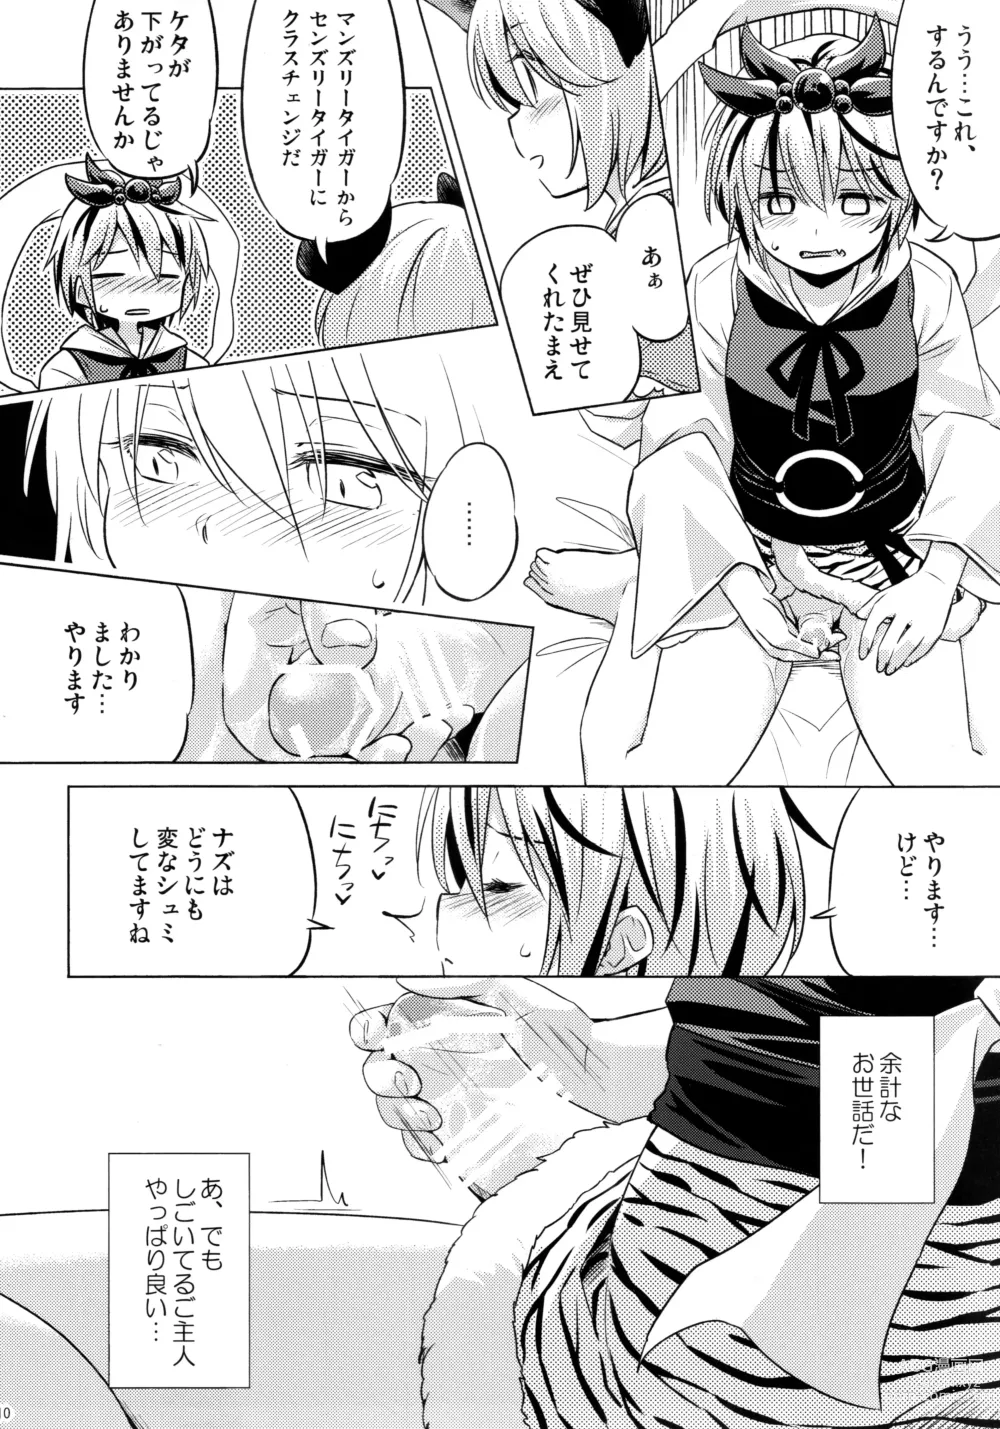 Page 9 of doujinshi Onazrin to Senzurii Tiger